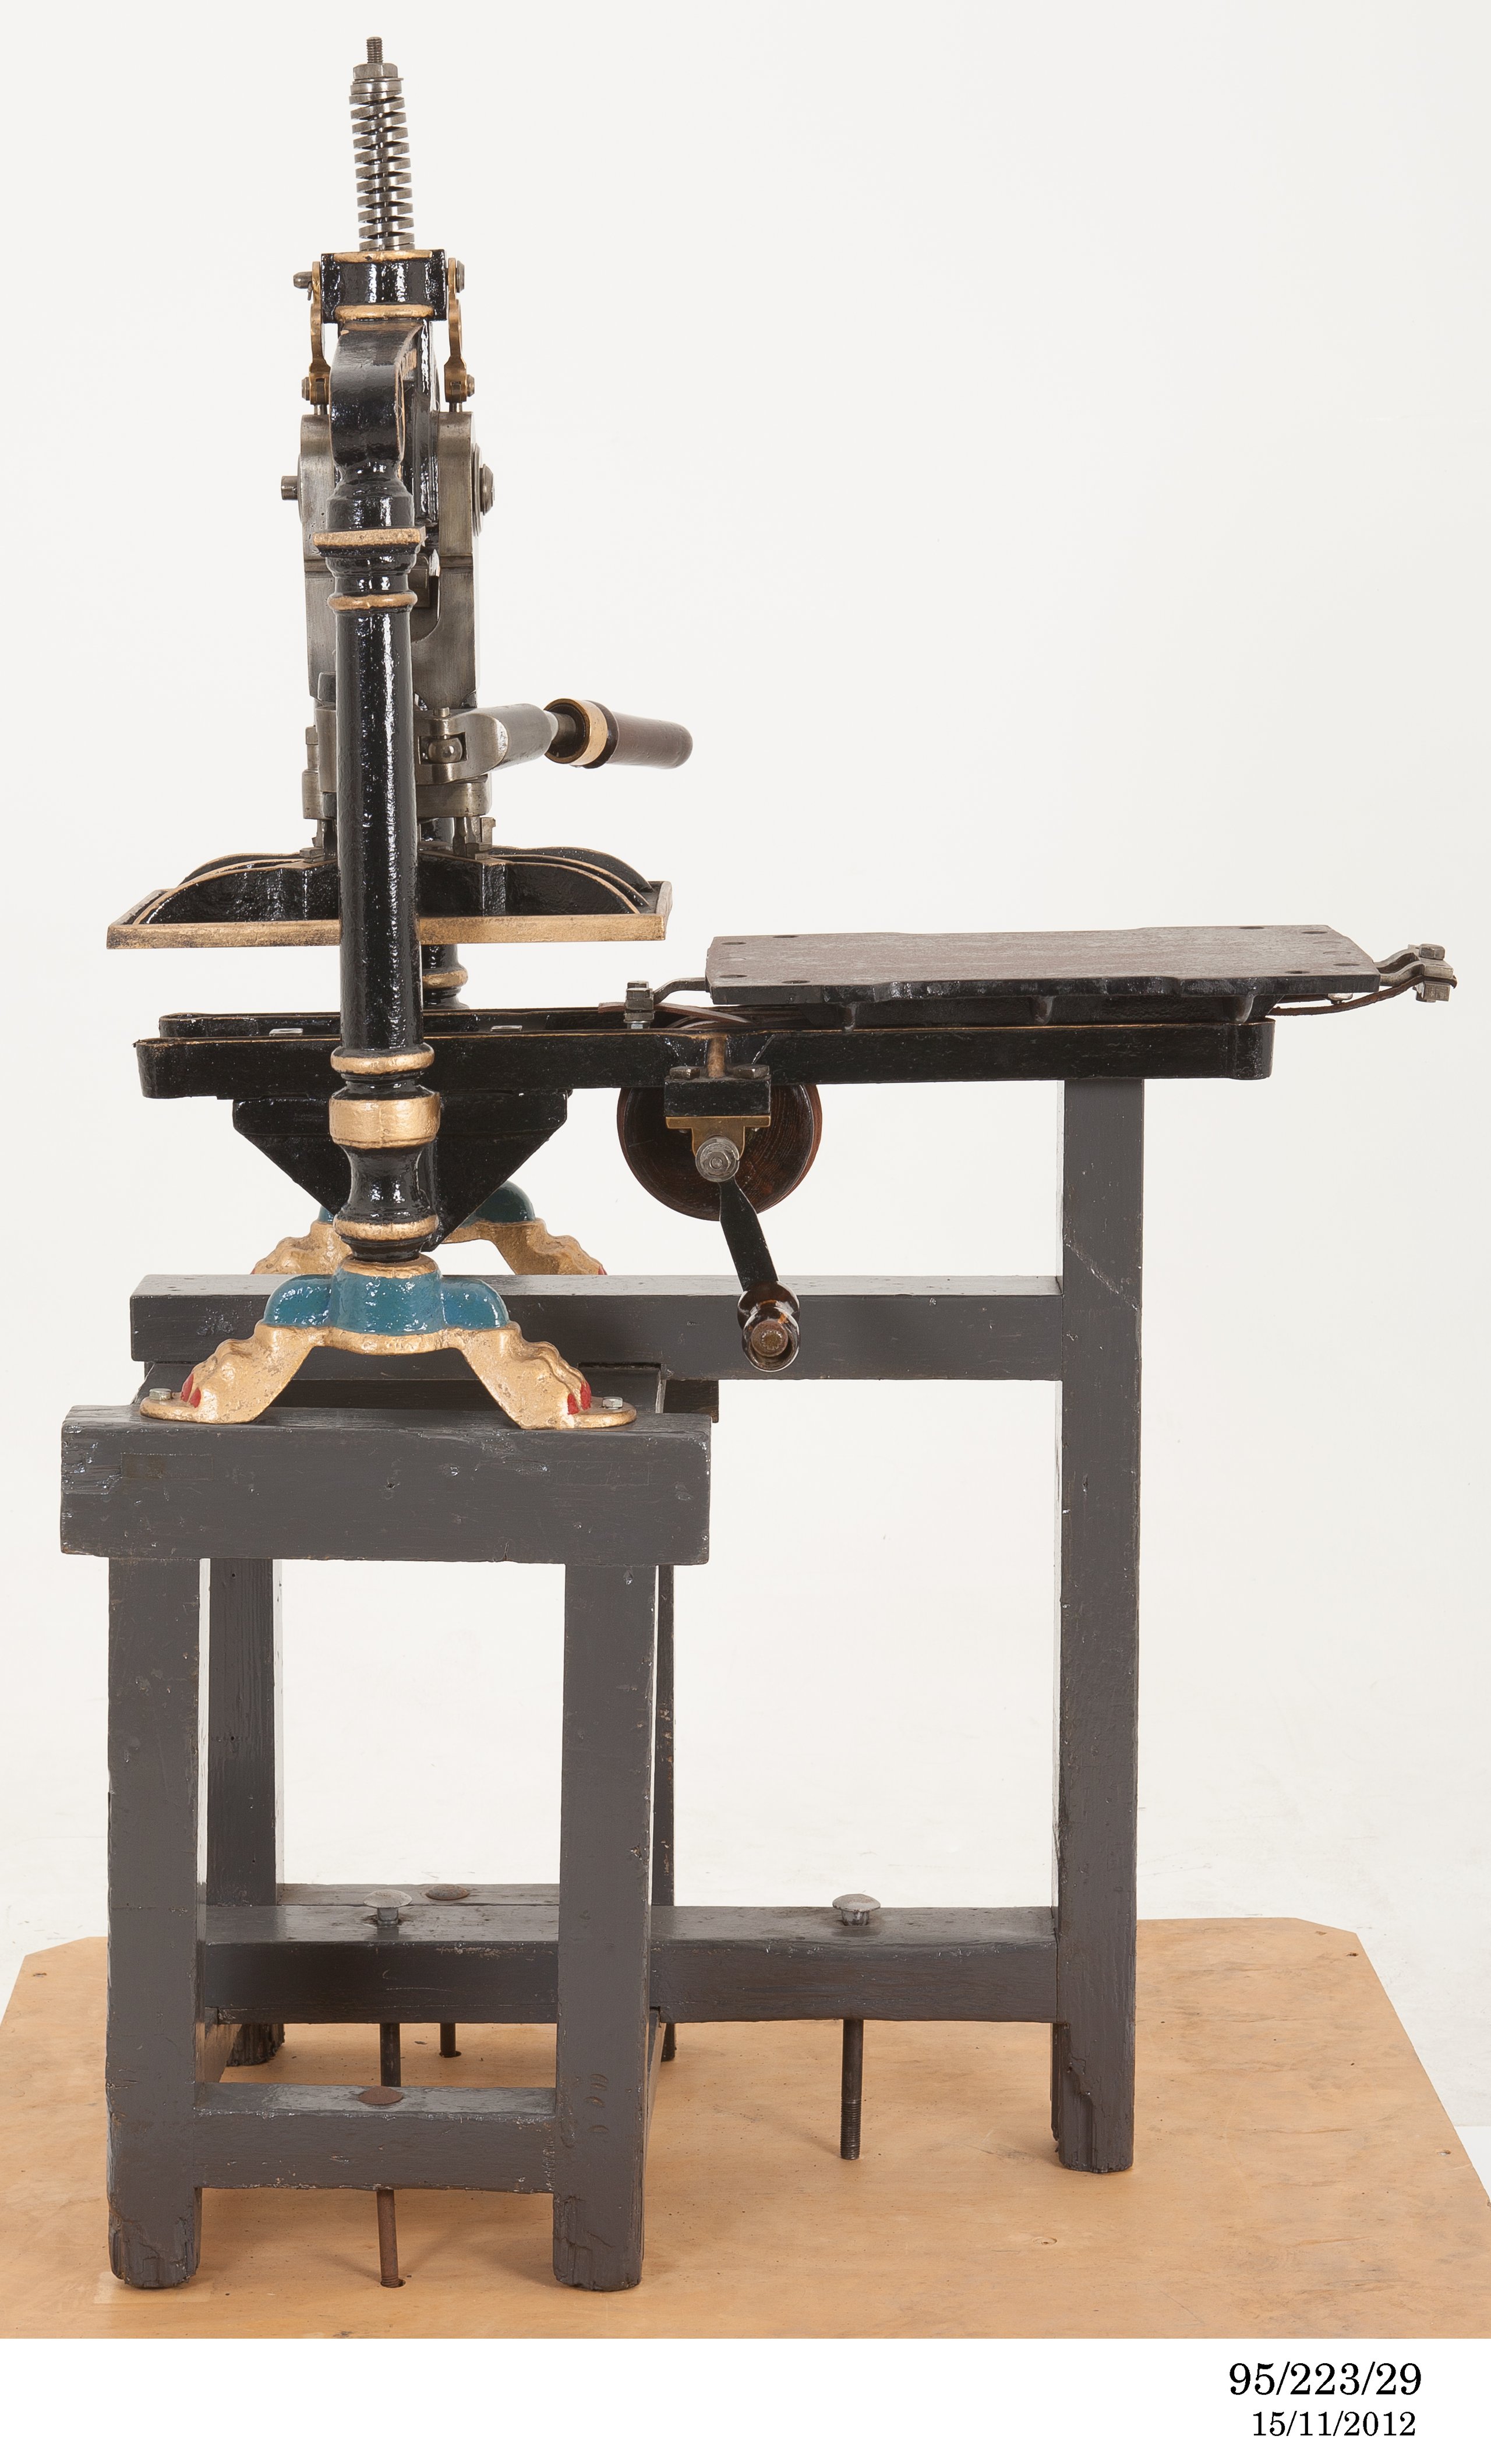 Albion printing press